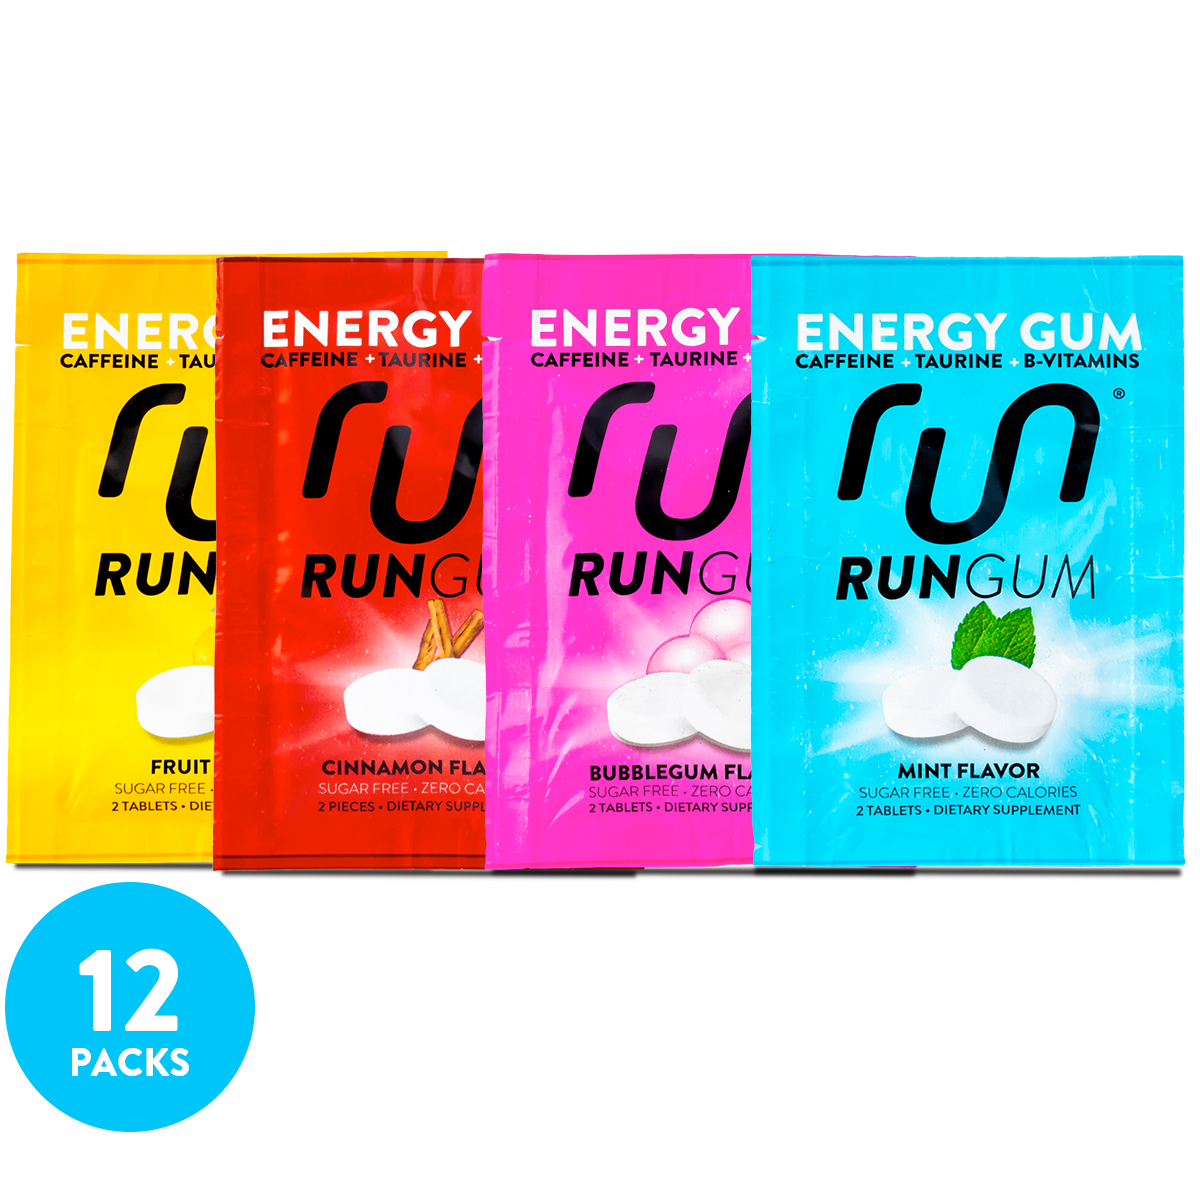 Energy Gum Original | Caffeine Chewing by Run Athletes, Runners,